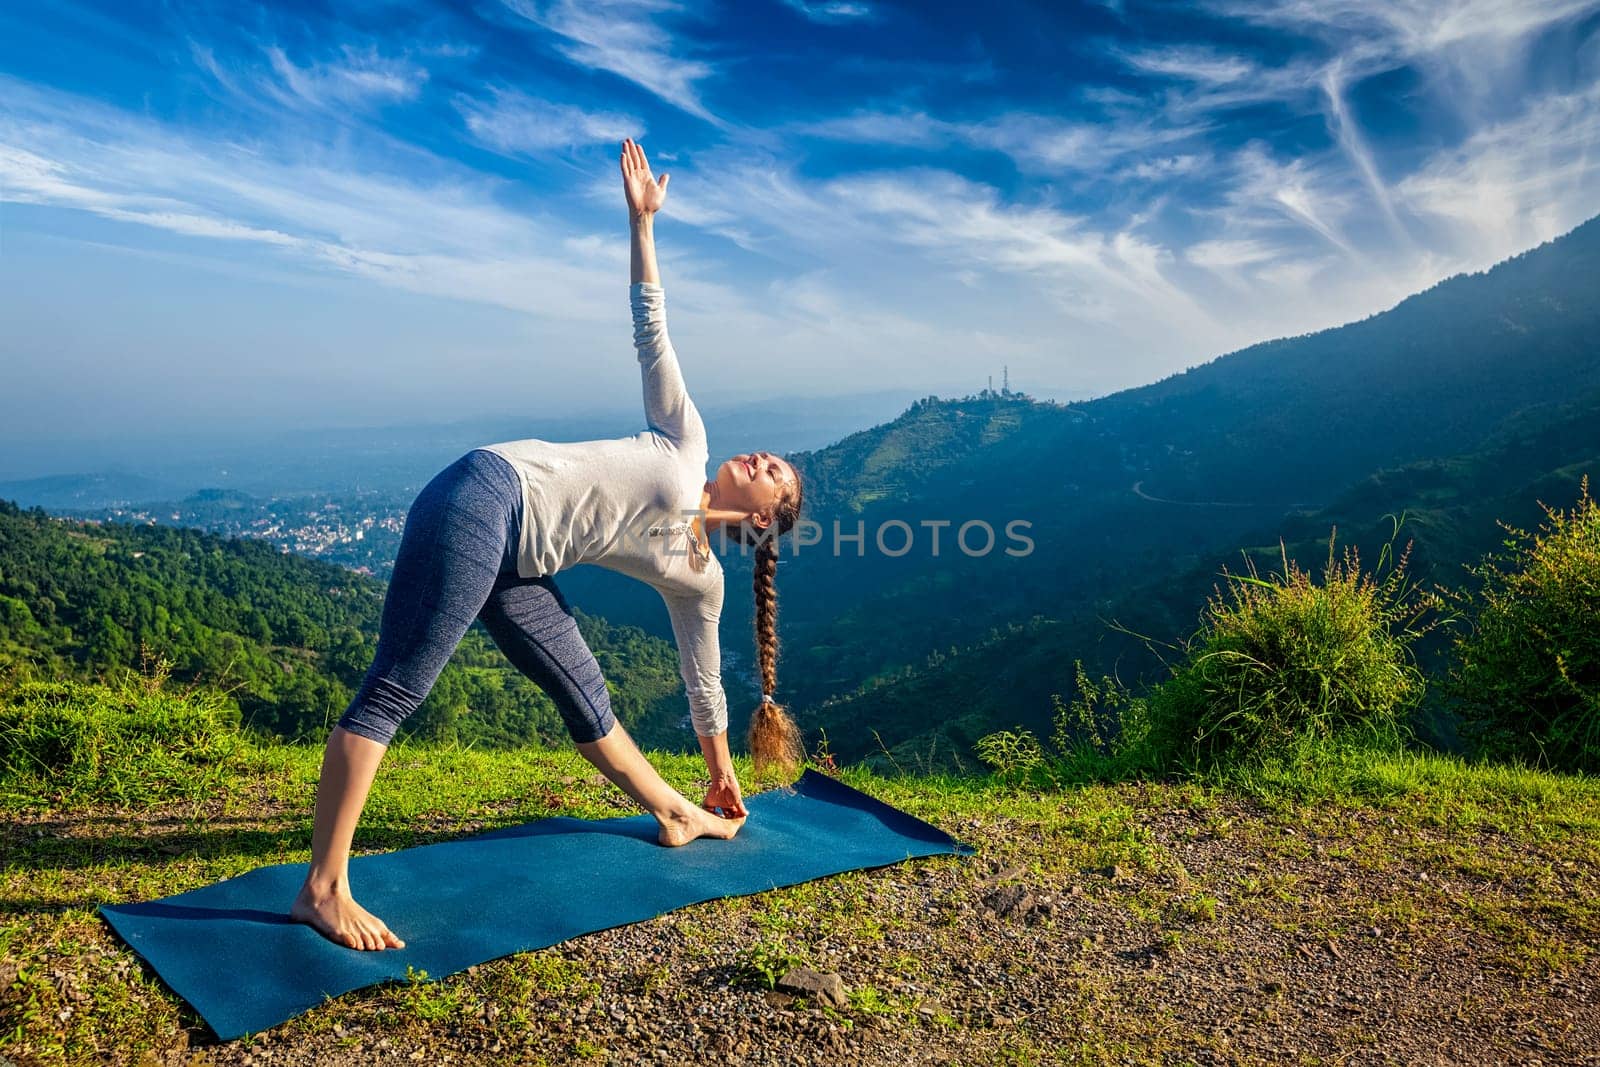 Woman doing Ashtanga Vinyasa yoga asana Utthita trikonasana - extended triangle pose outdoors in mountains in the morning